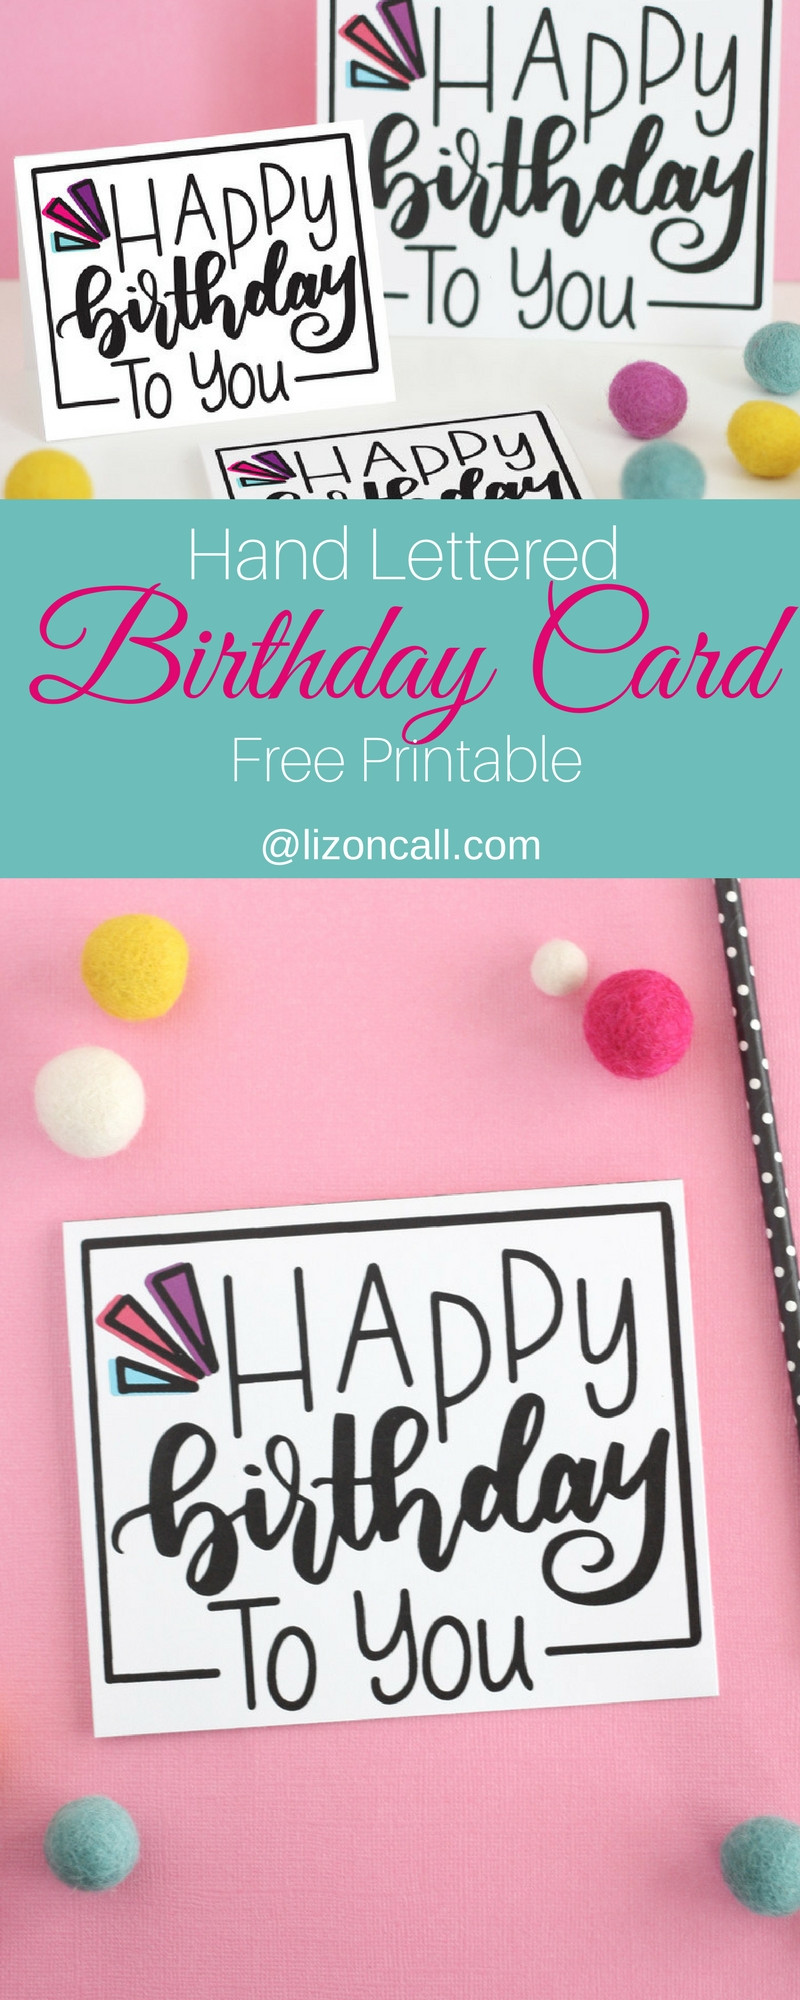 Print Birthday Card Free
 Hand Lettered Free Printable Birthday Card Liz on Call